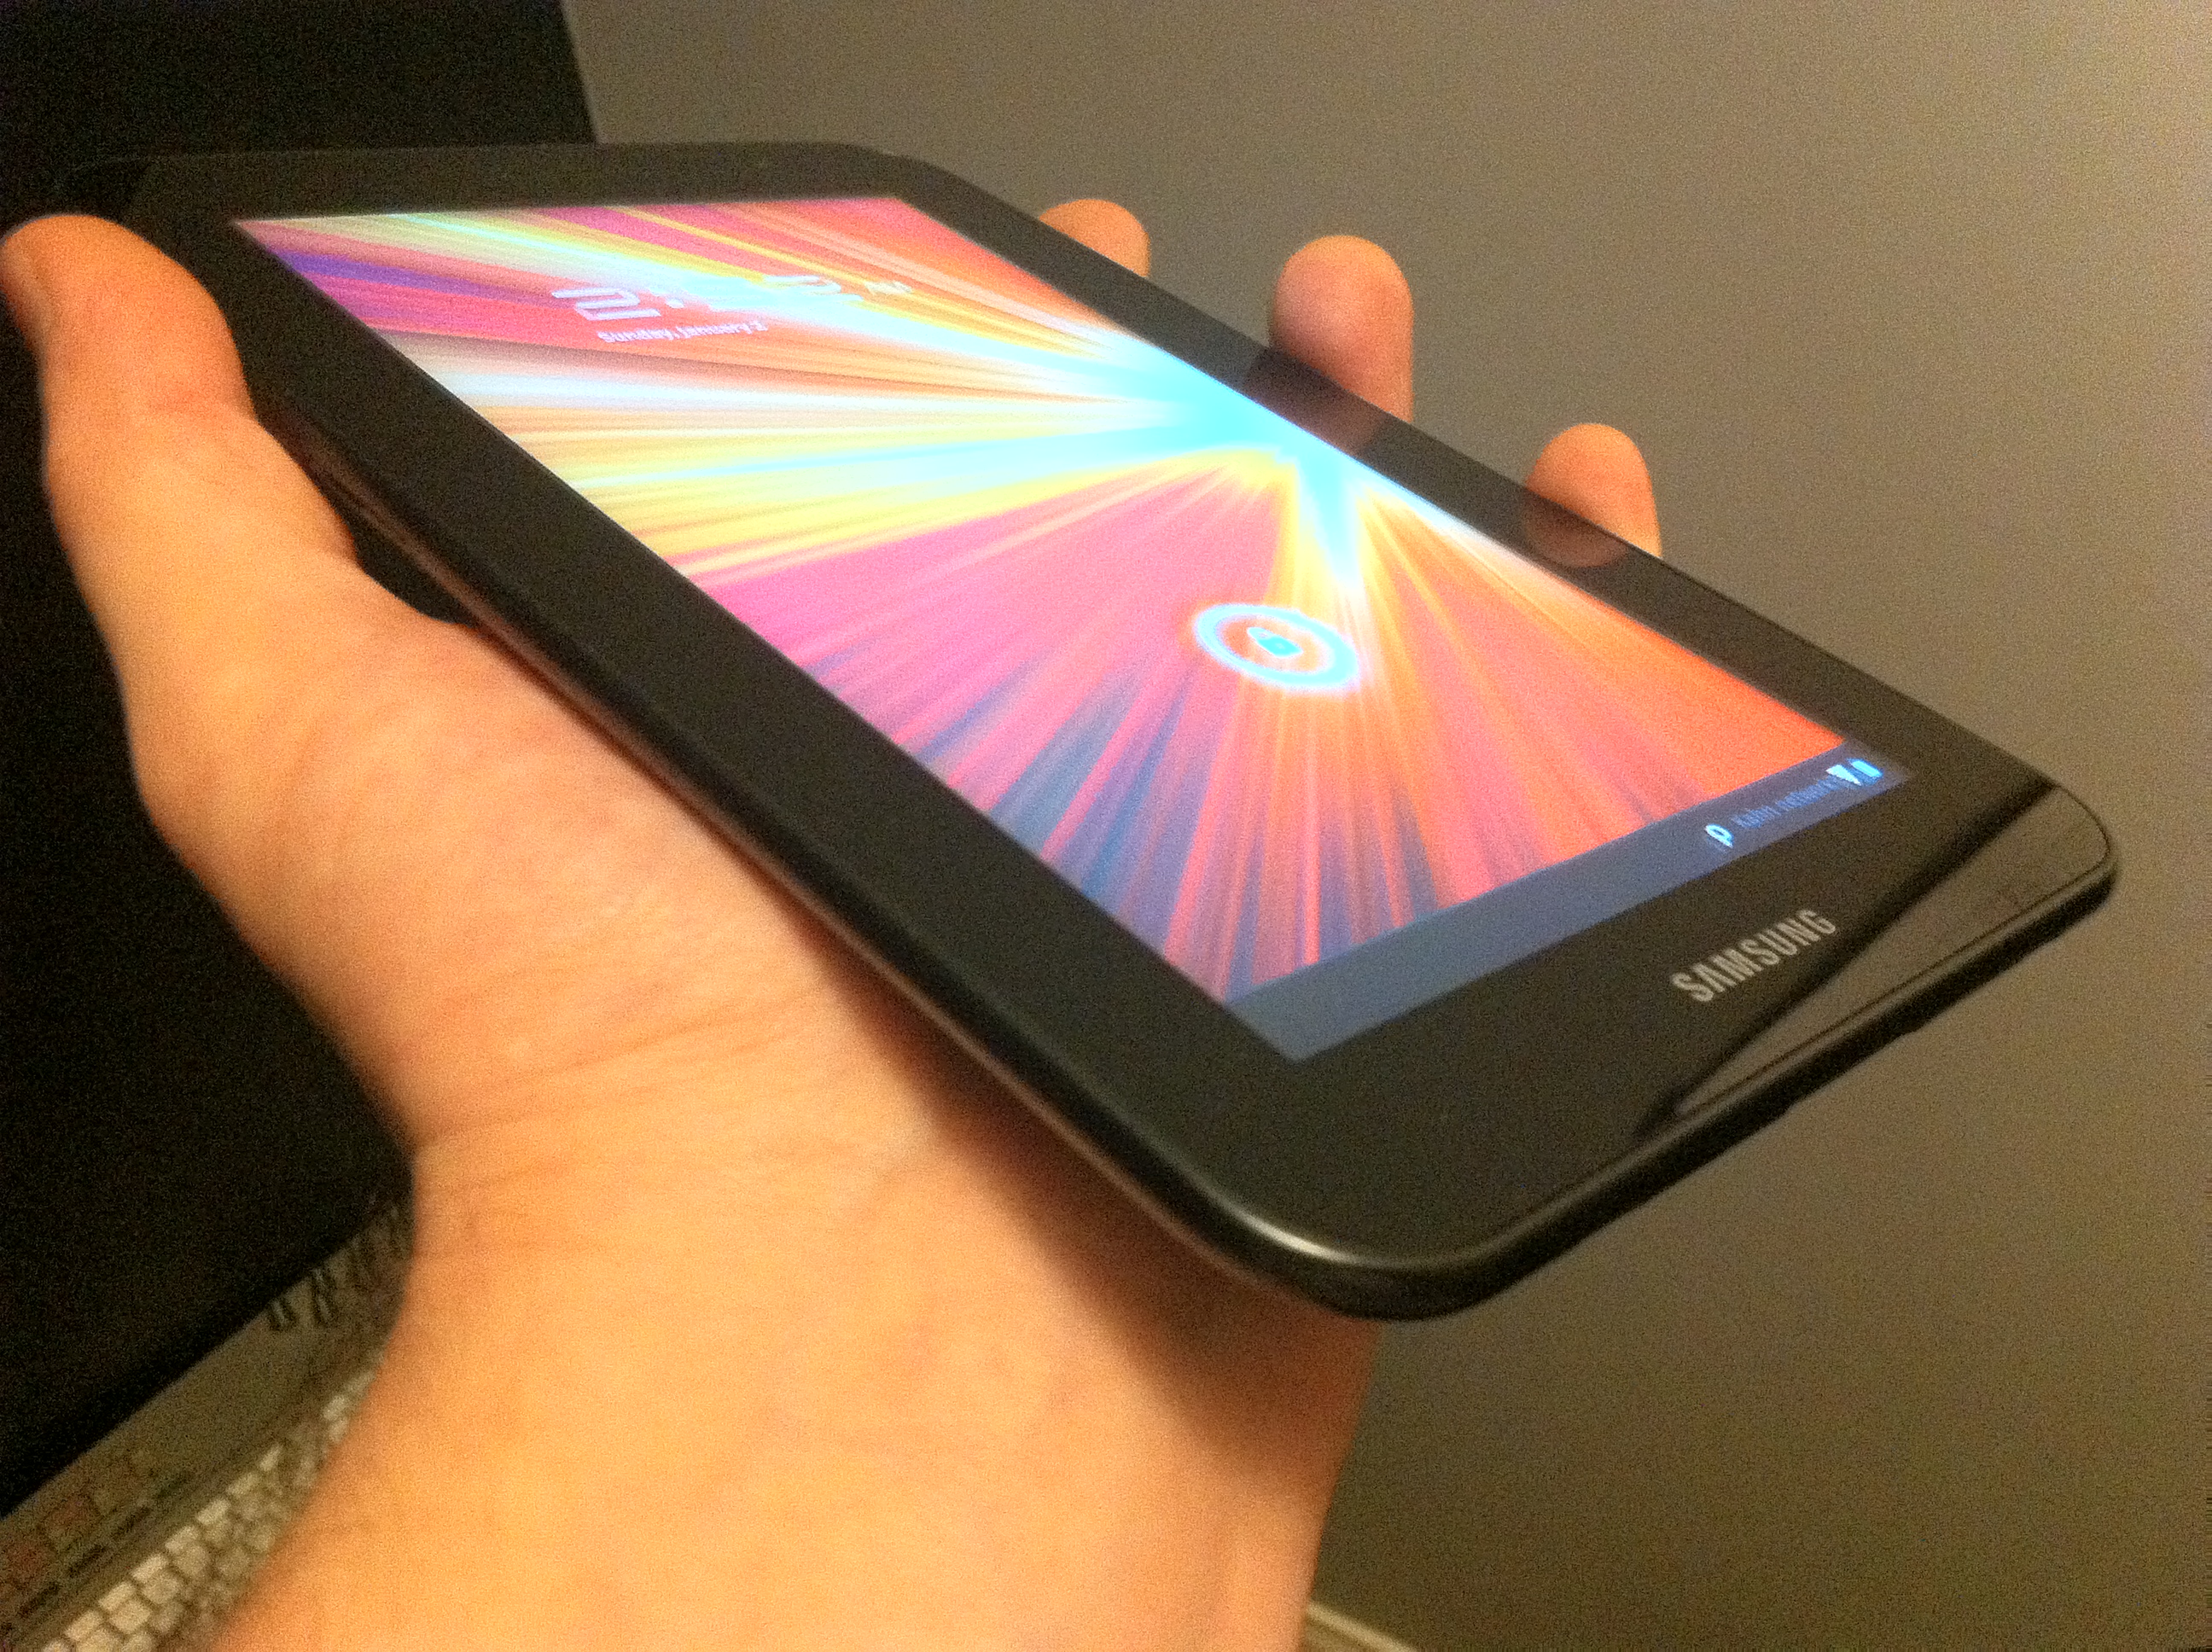 Review: Samsung Galaxy Tab 7.0 Plus - Fantastic form factor takes